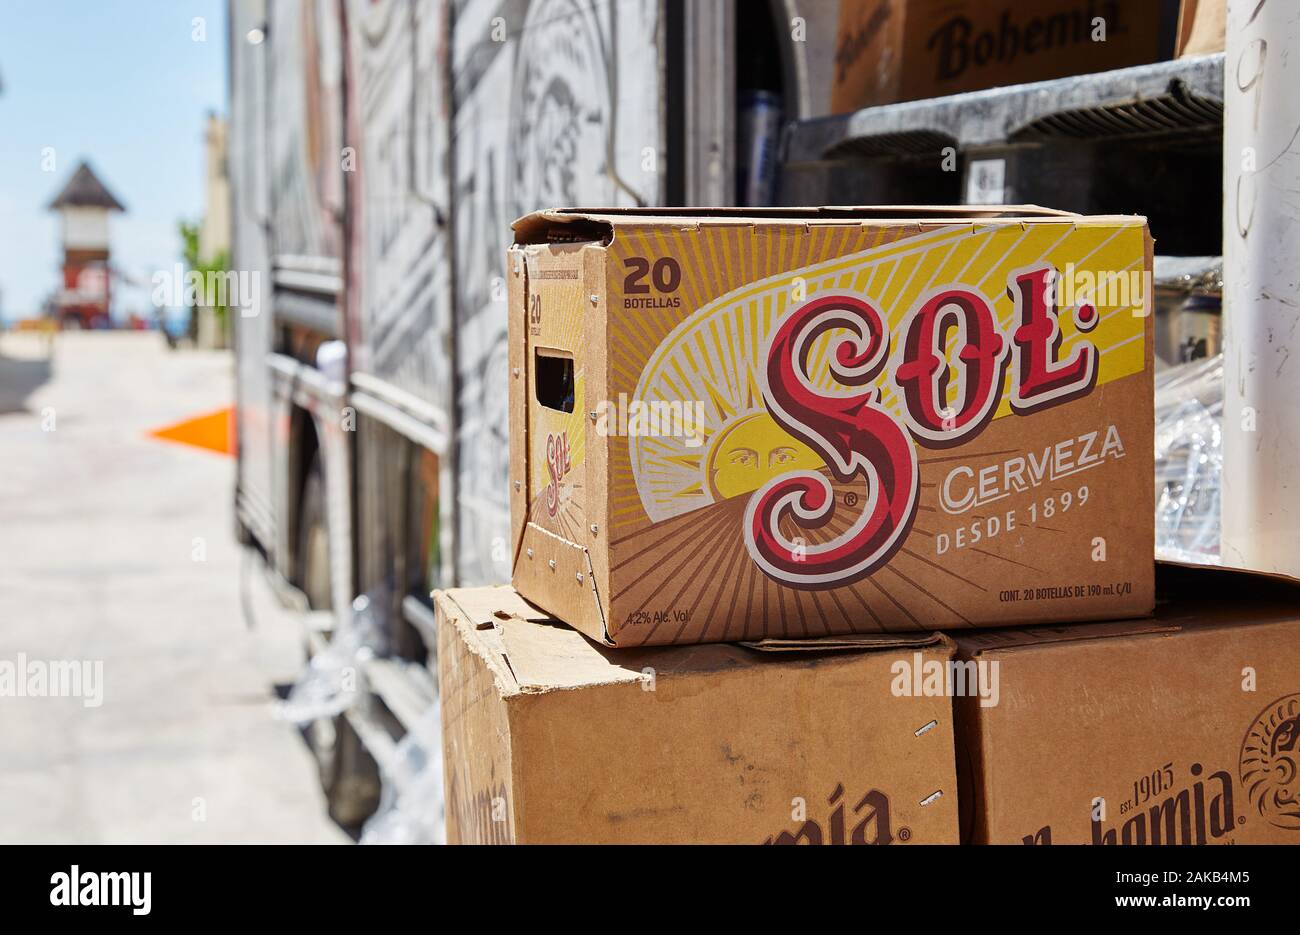 Caja de cerveza mexicana fotografías e imágenes de alta resolución - Alamy